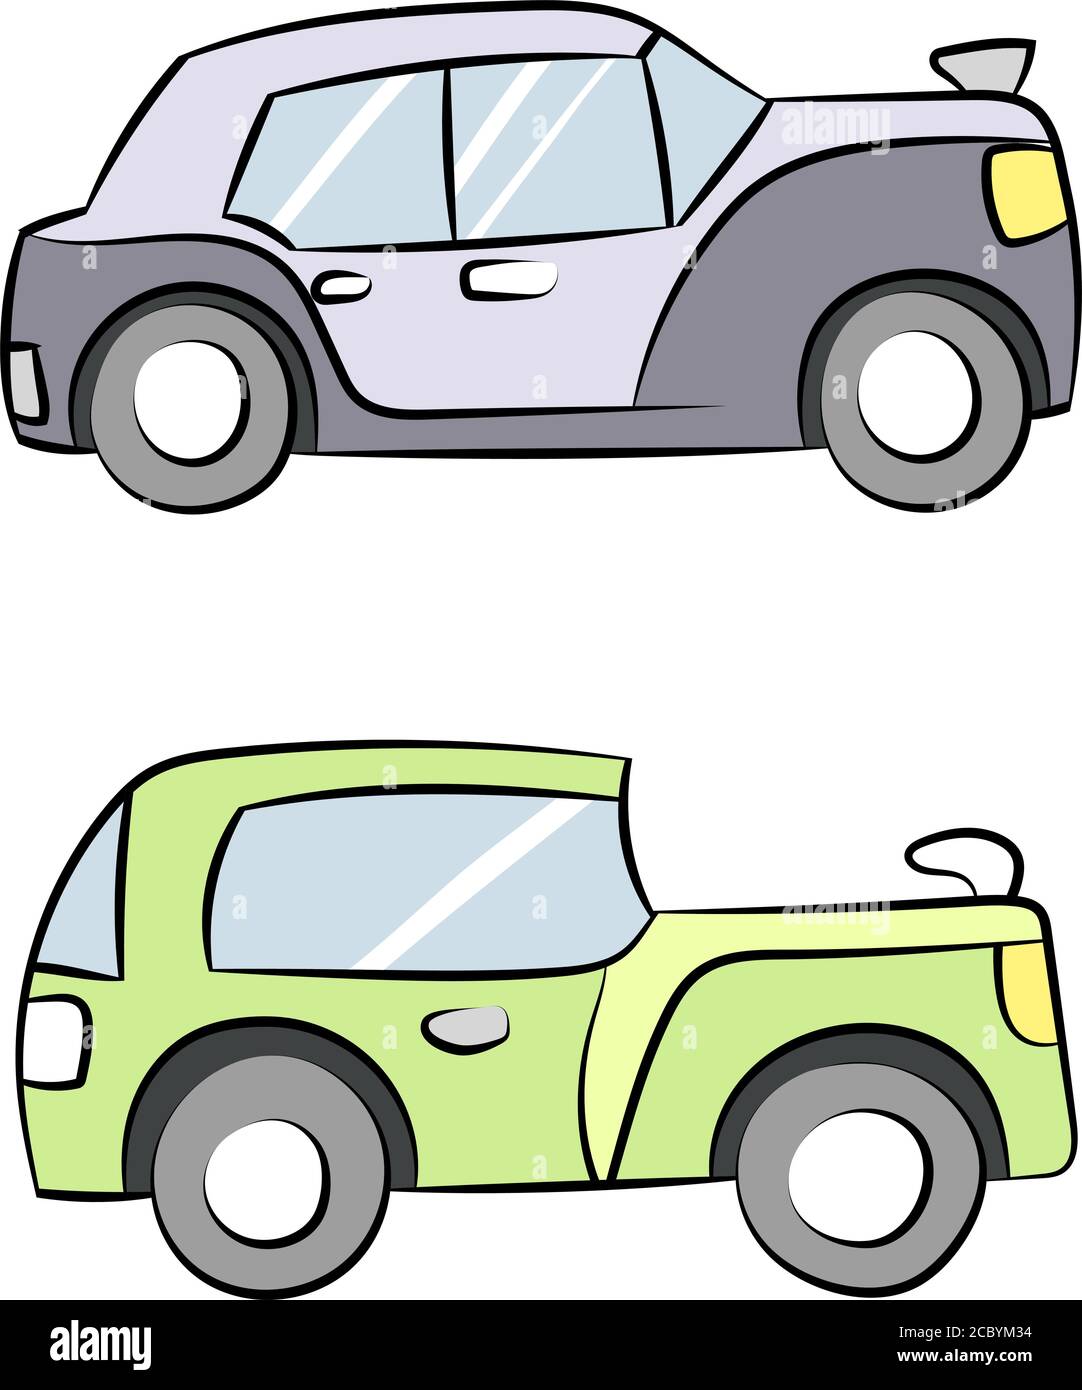 Cartoon stylish retro car vector illustration Stock Vector